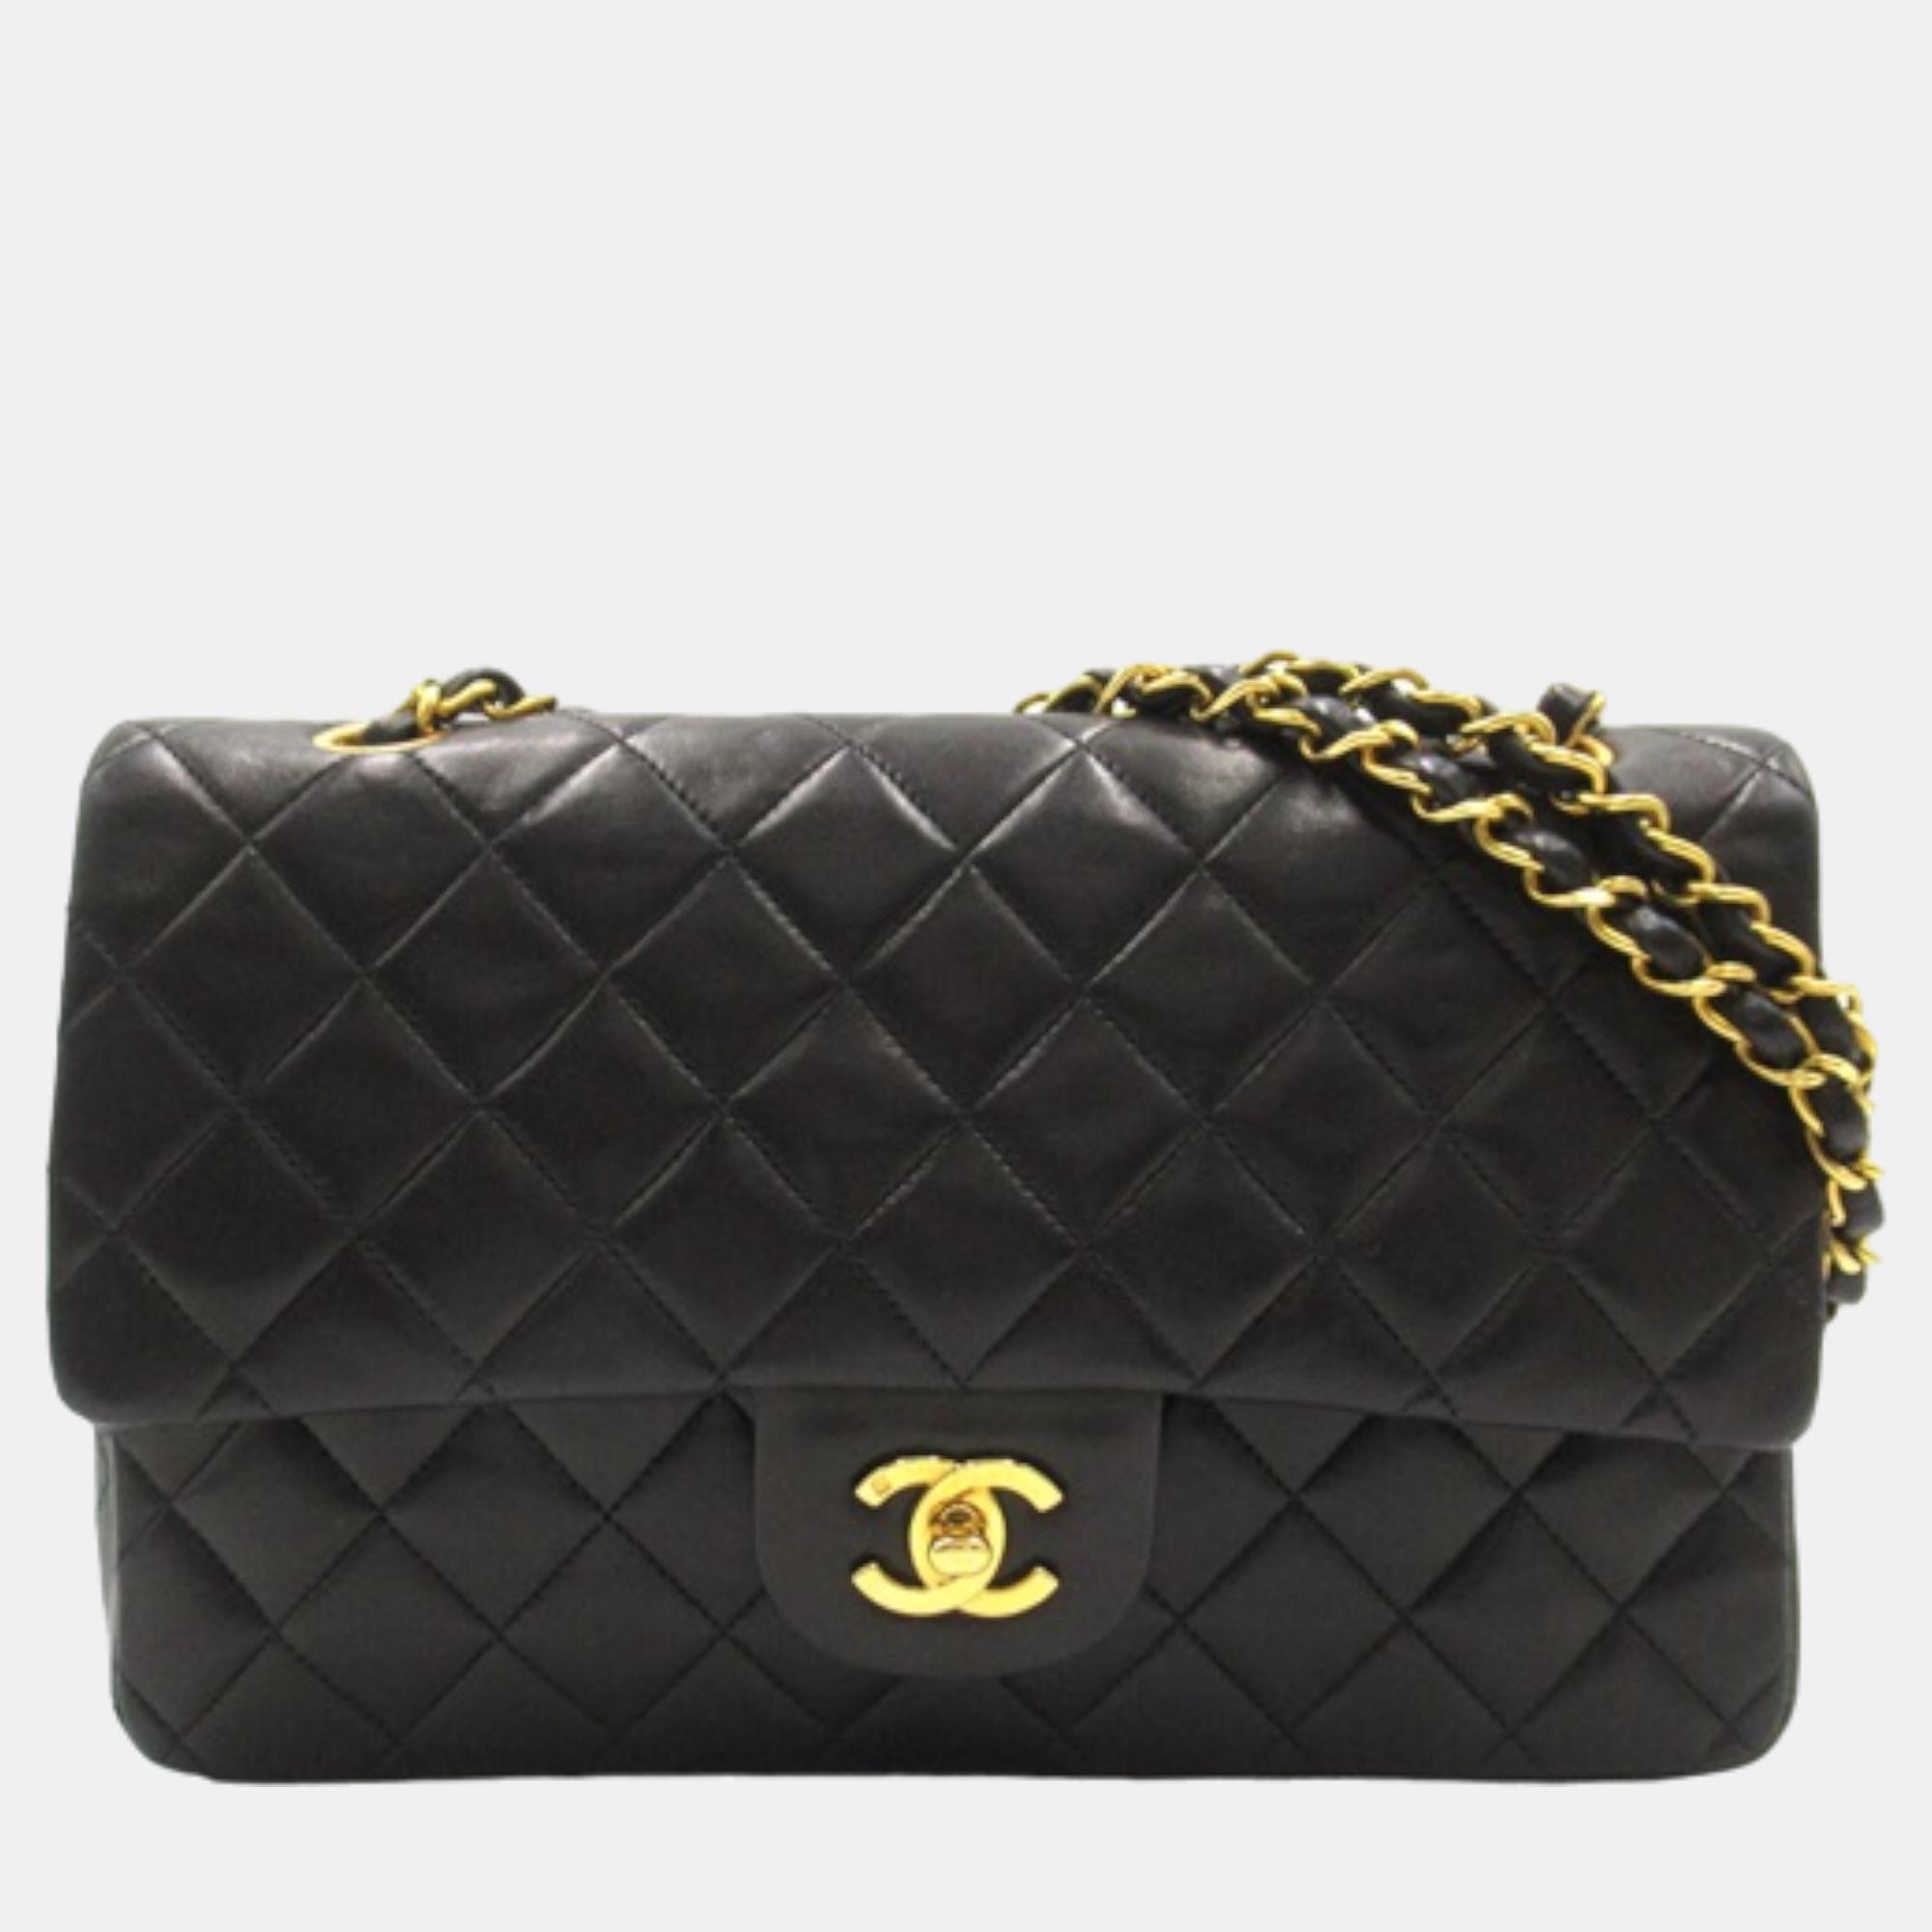 Chanel black leather medium classic double flap bag